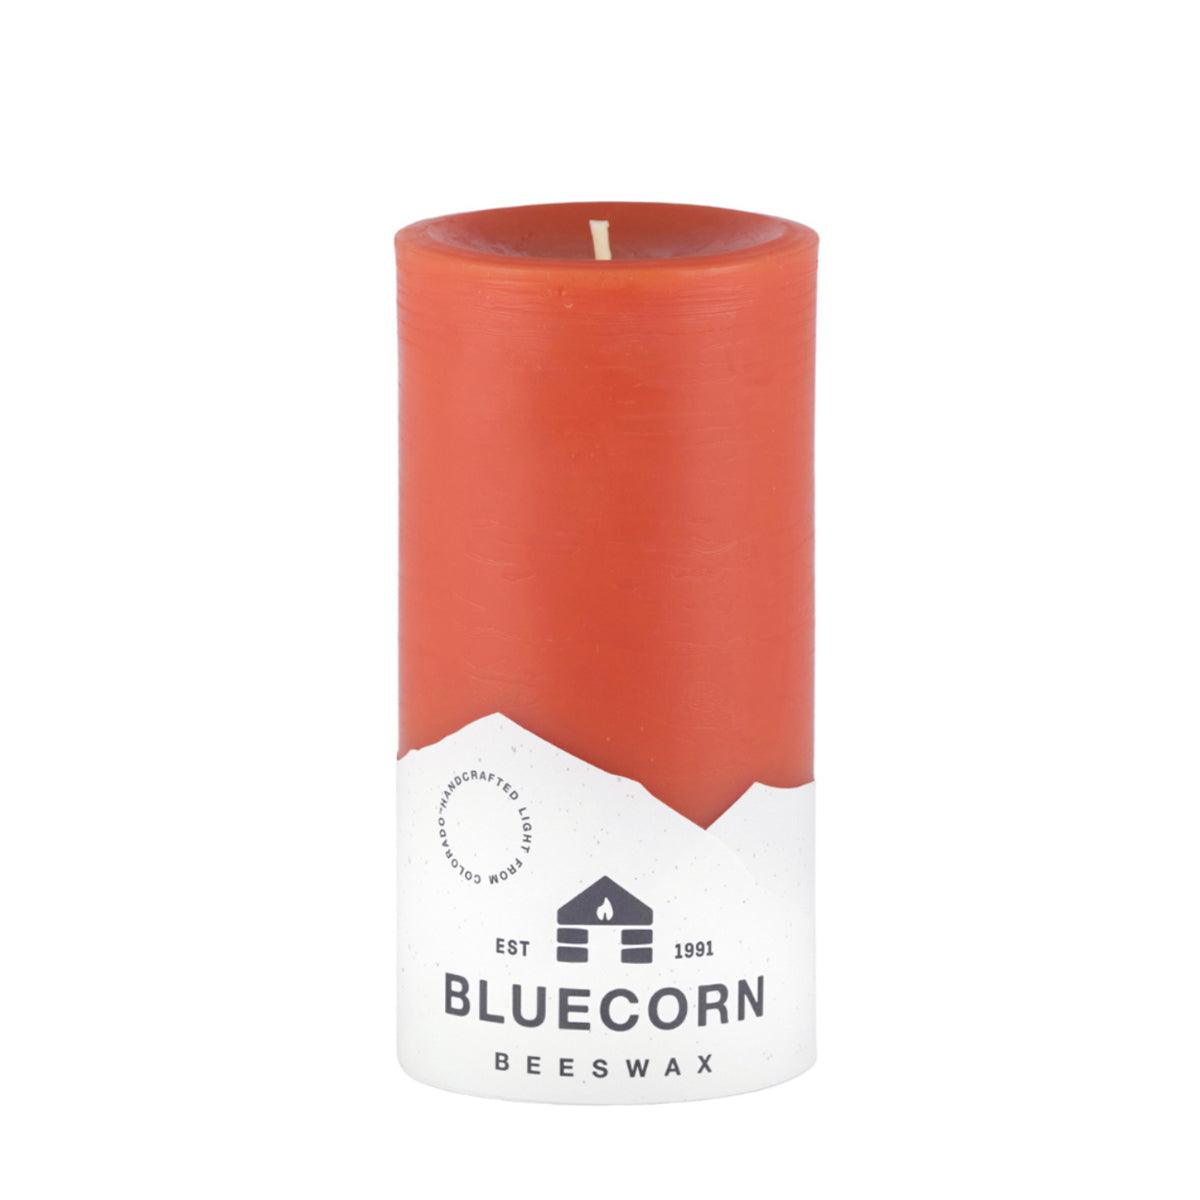 Bluecorn Beeswax Candles